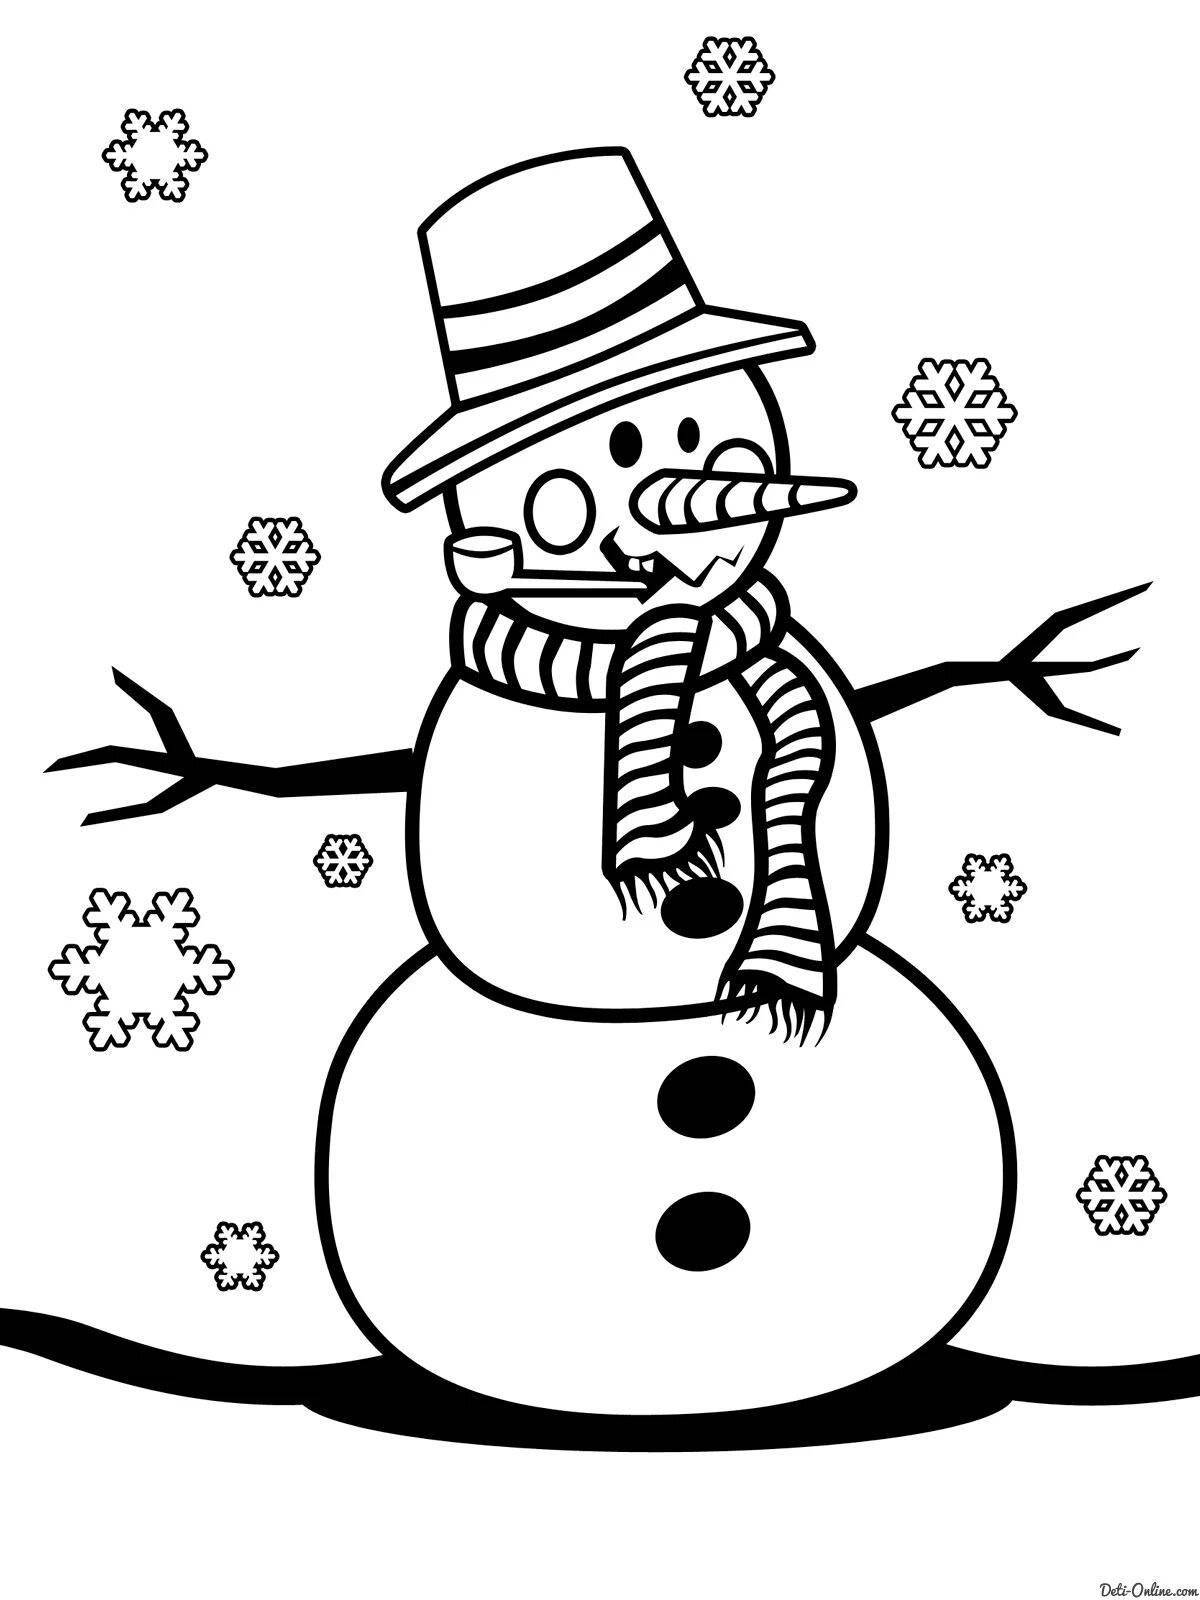 Snowman#7